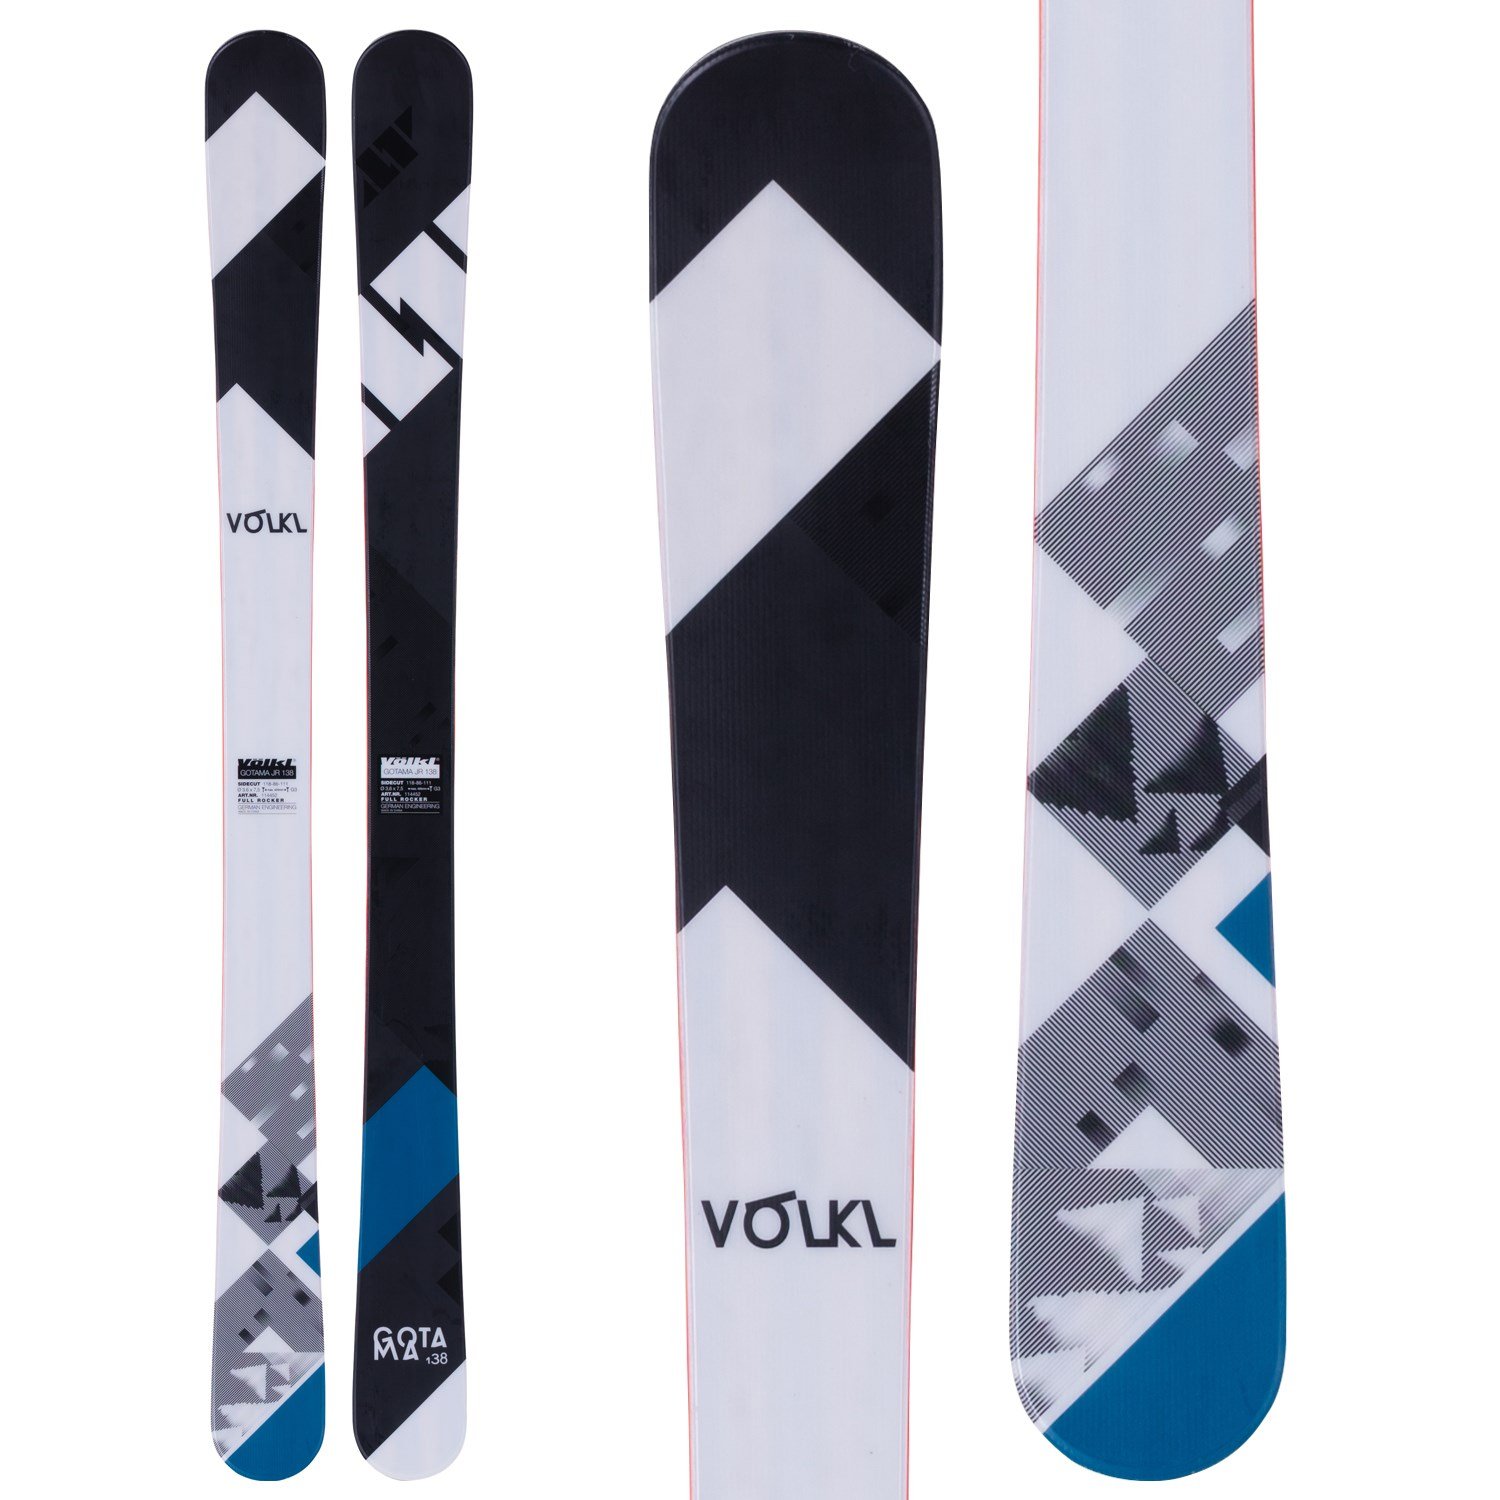 Volkl Gotama Jr Skis - Boy's 2015 | evo